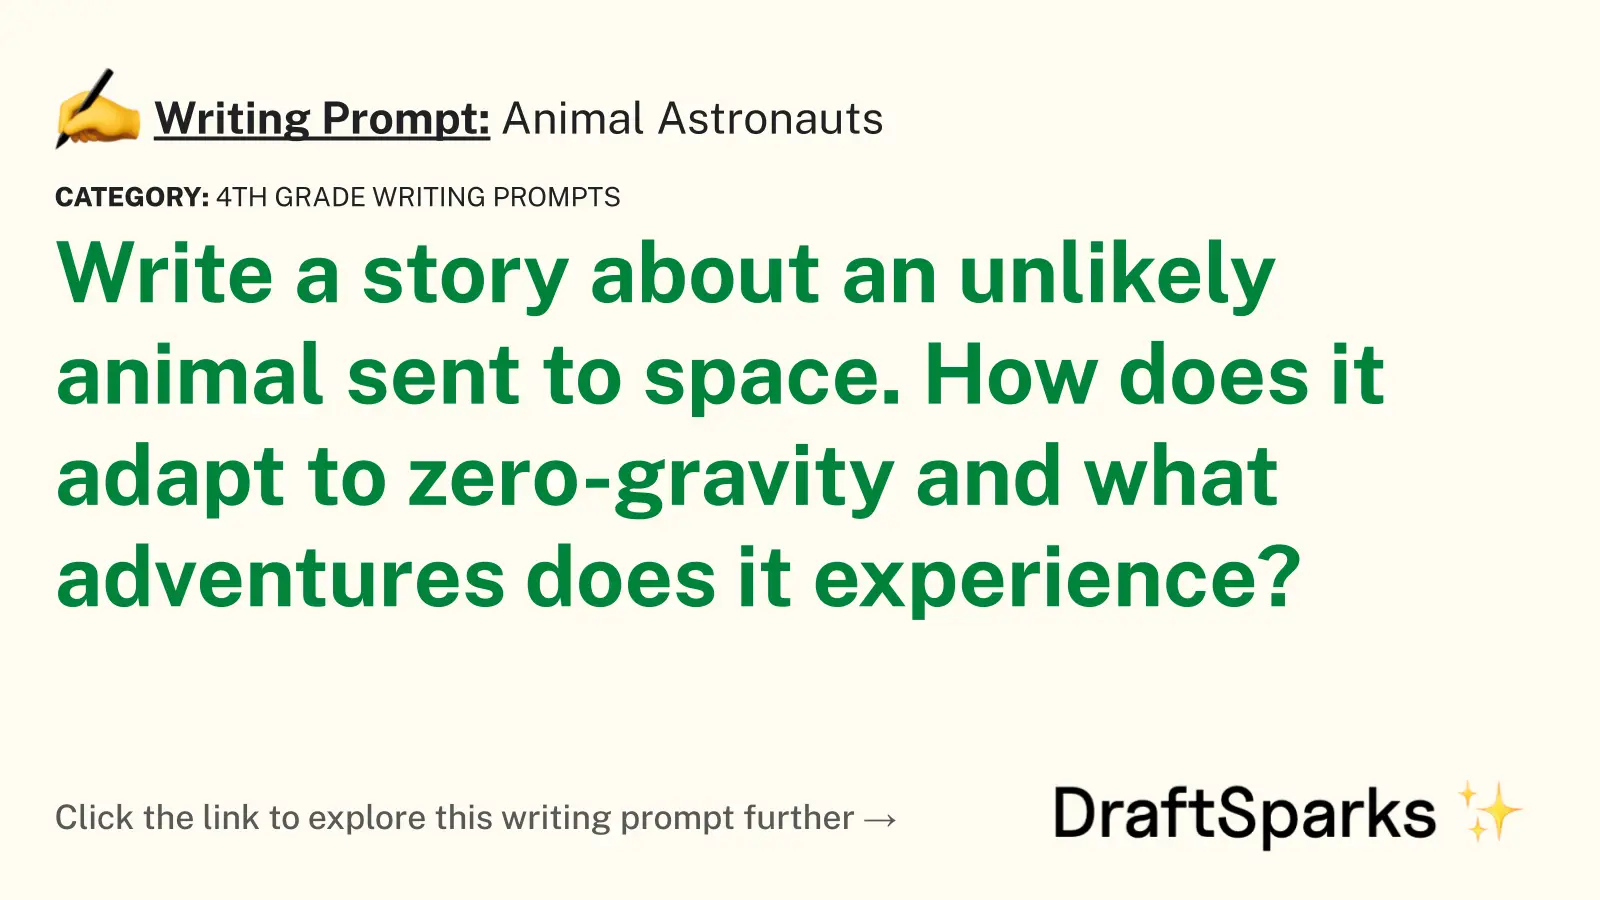 Animal Astronauts